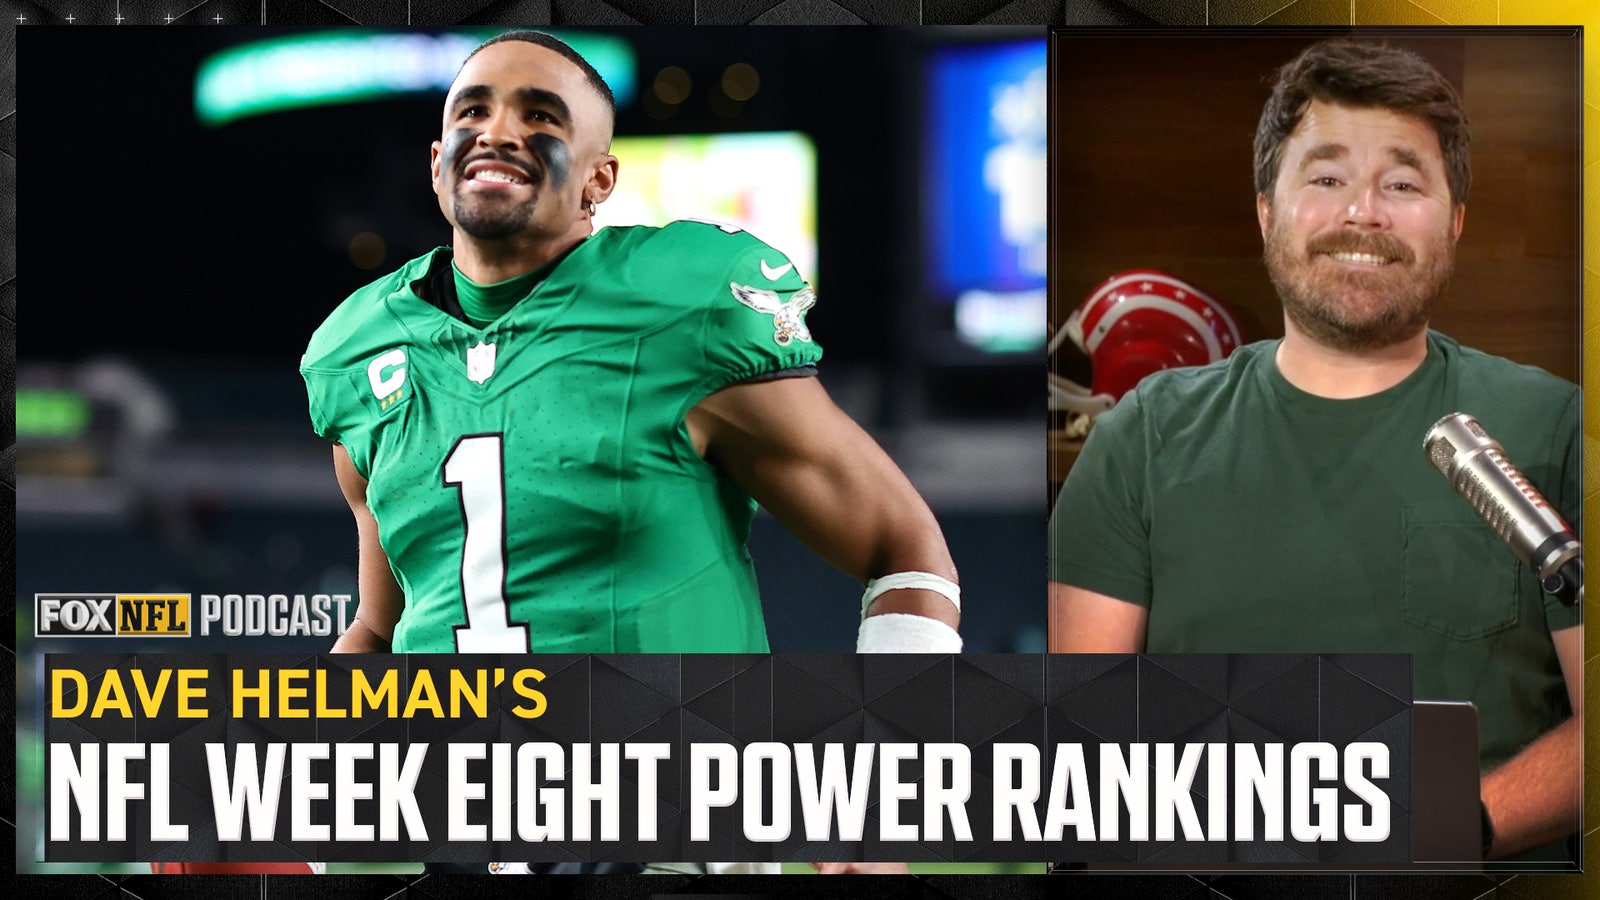 NFL Power Rankings: Eagles grab No. 1, Lamar Jackson and Ravens rise & Vikings finding form
